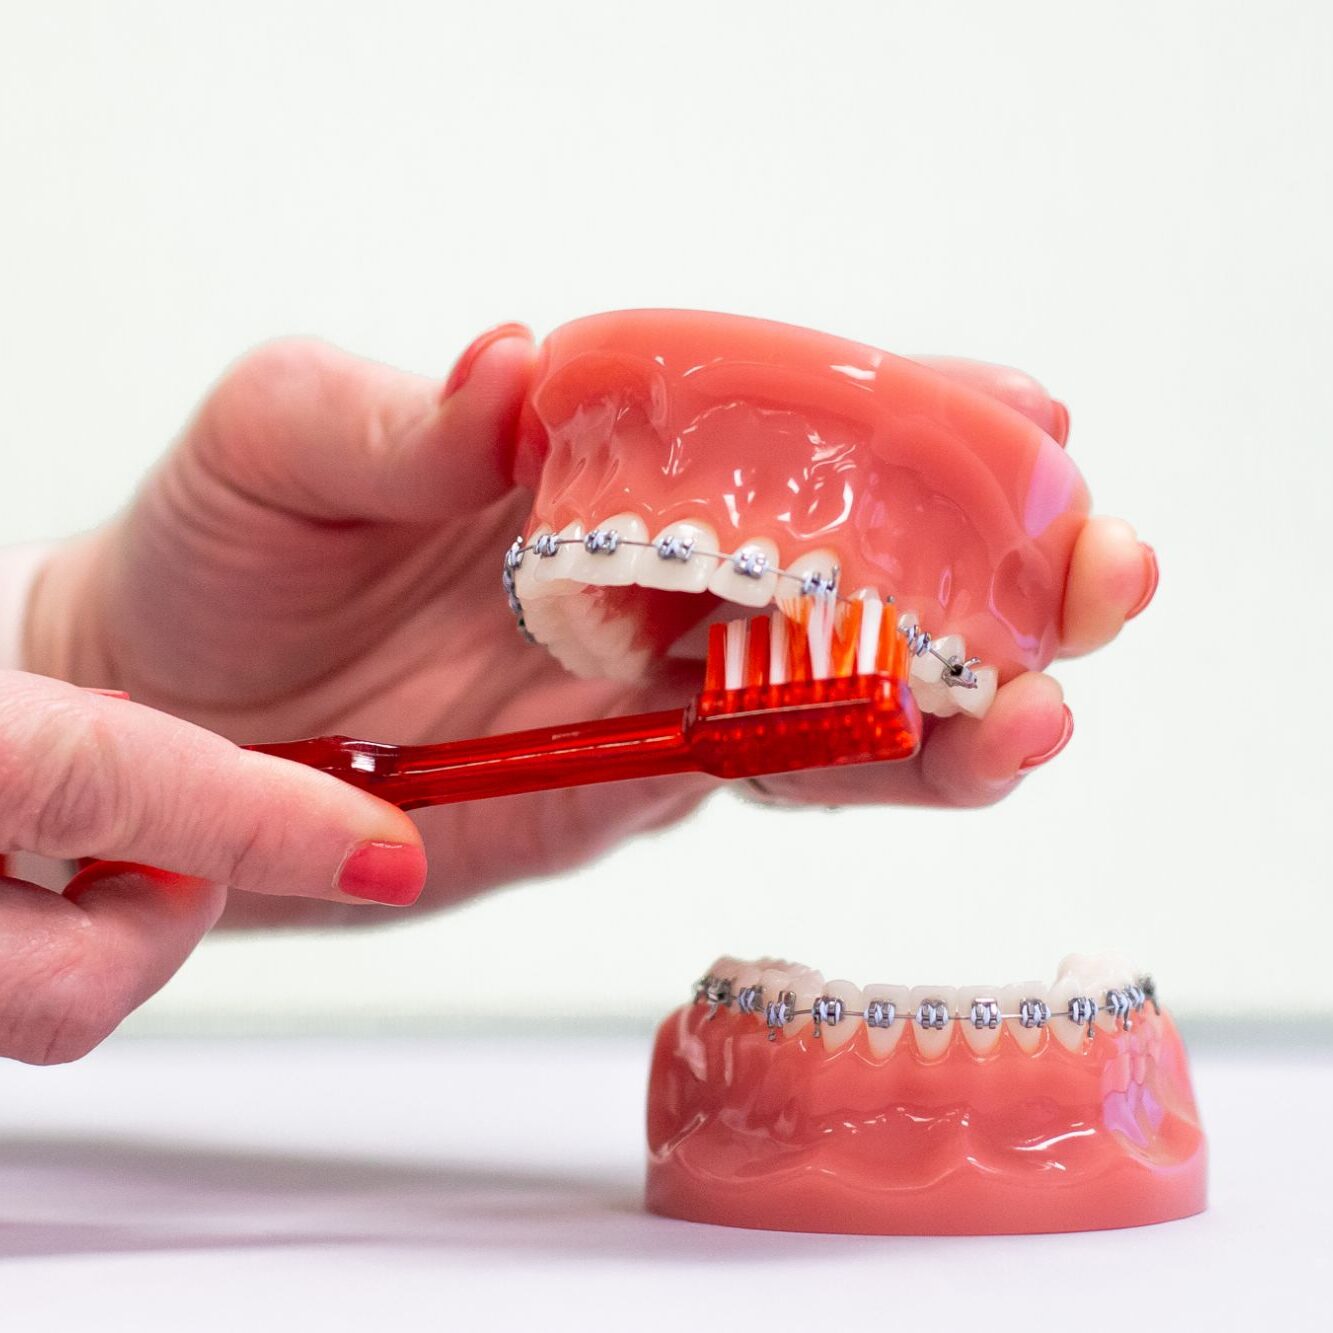 Brushing teeth model with braces